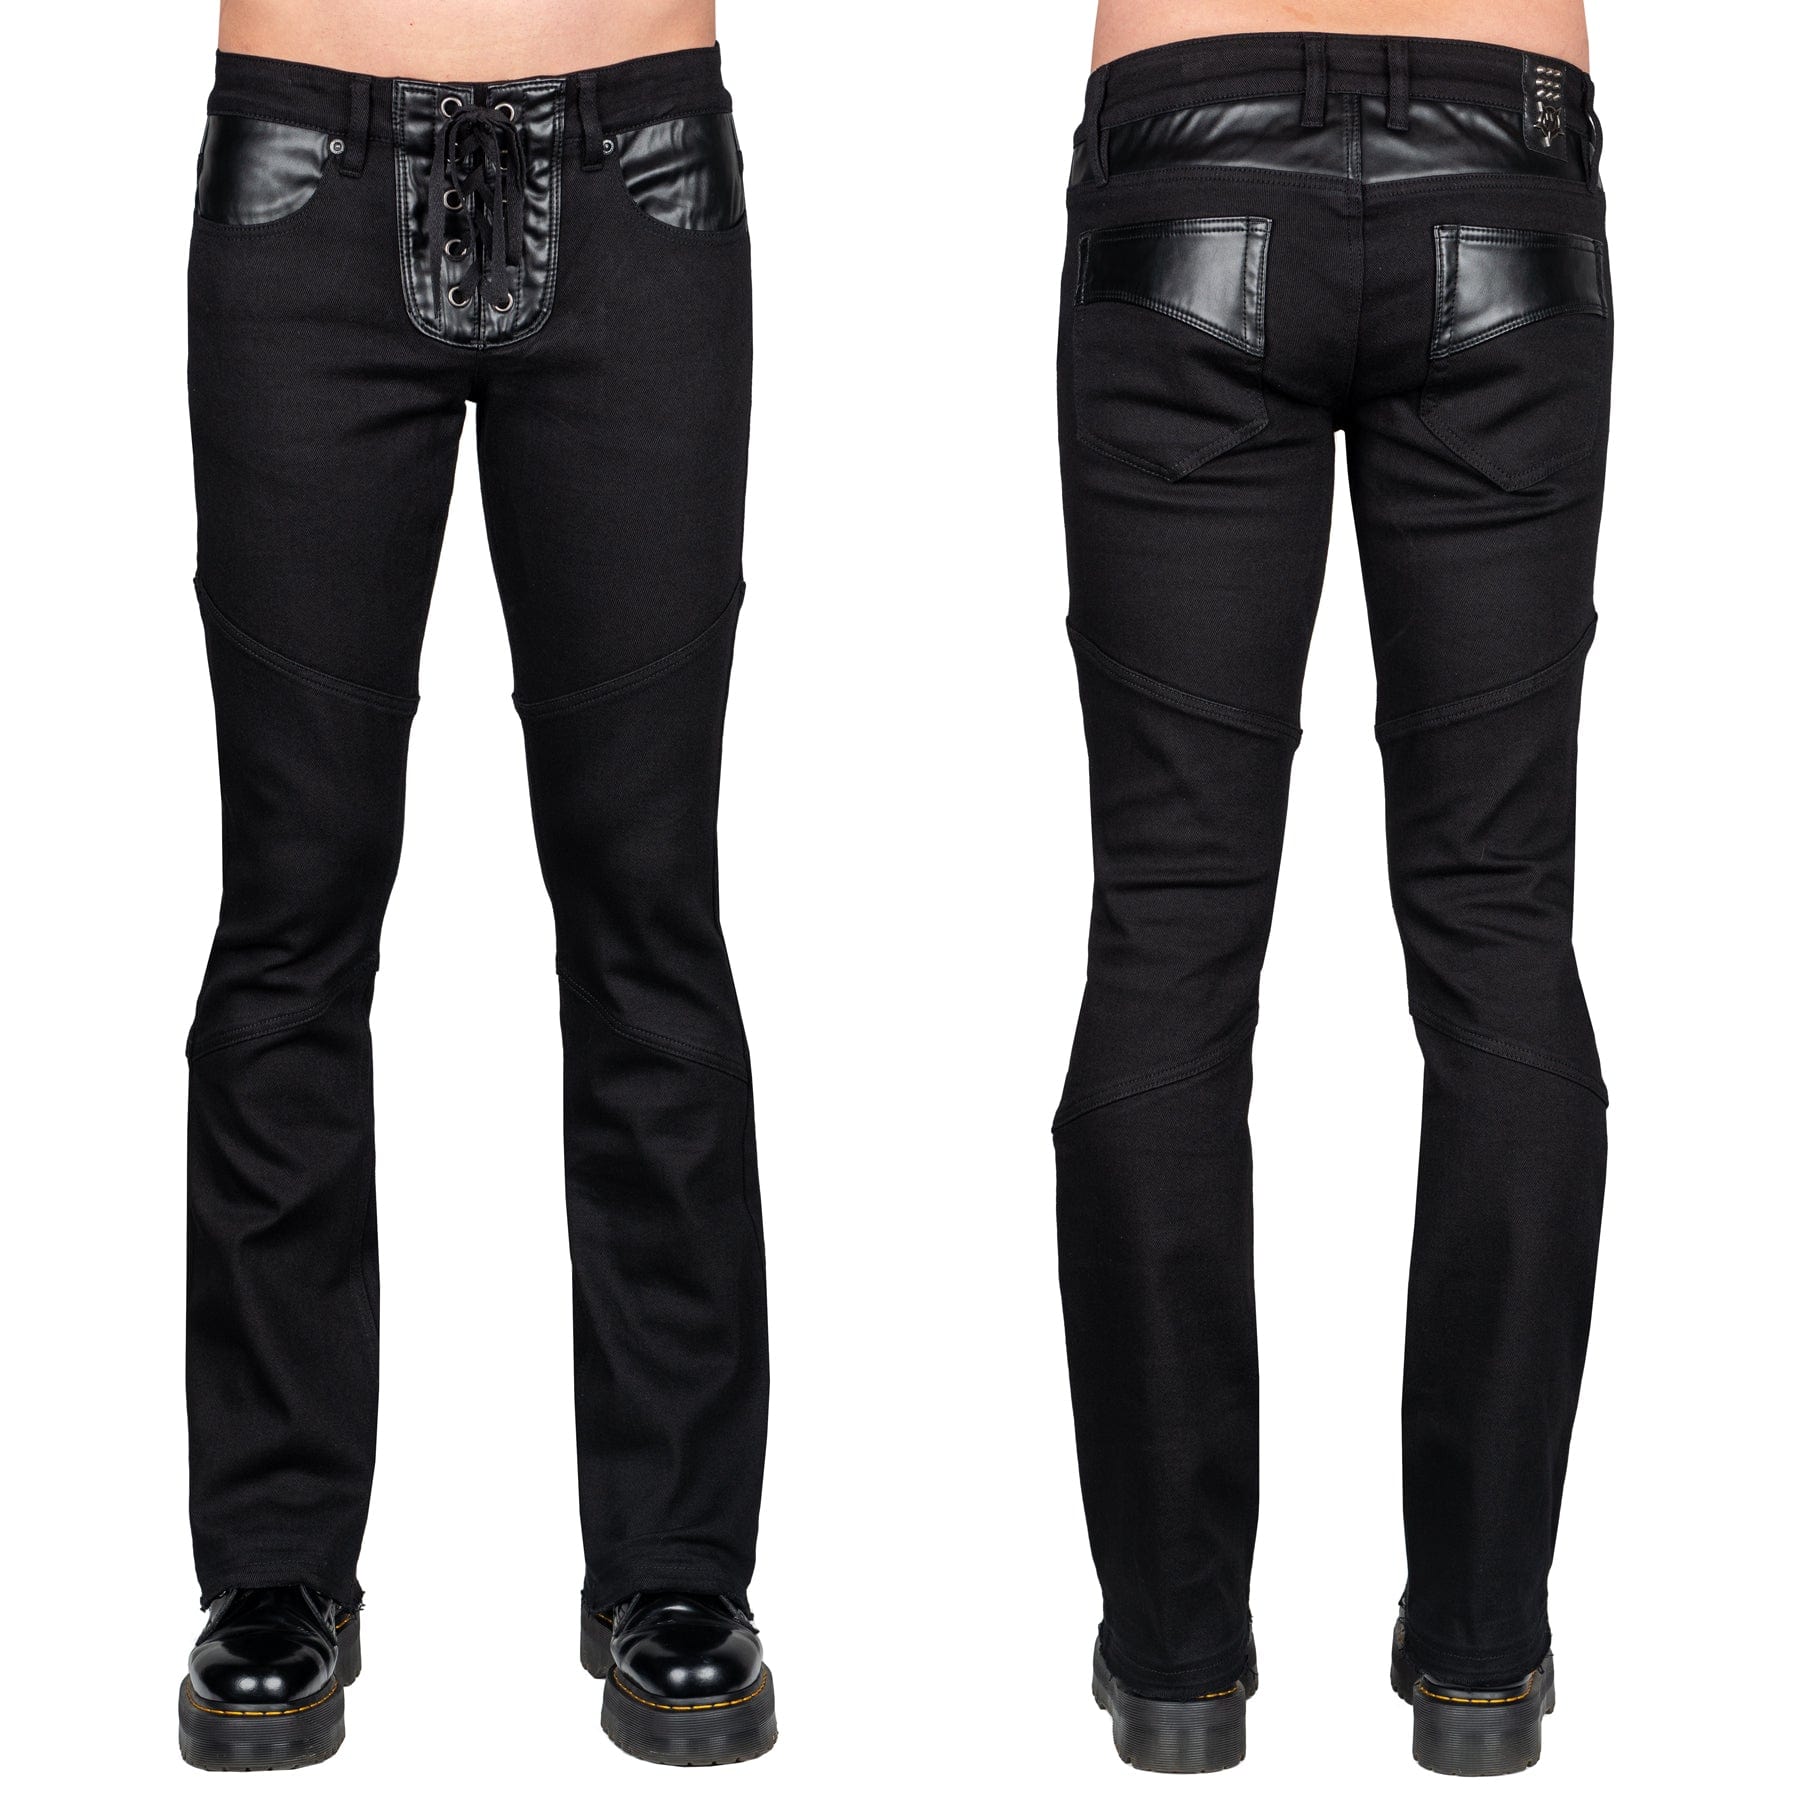 Wornstar Clothing Troubadour Stage Jeans - Black